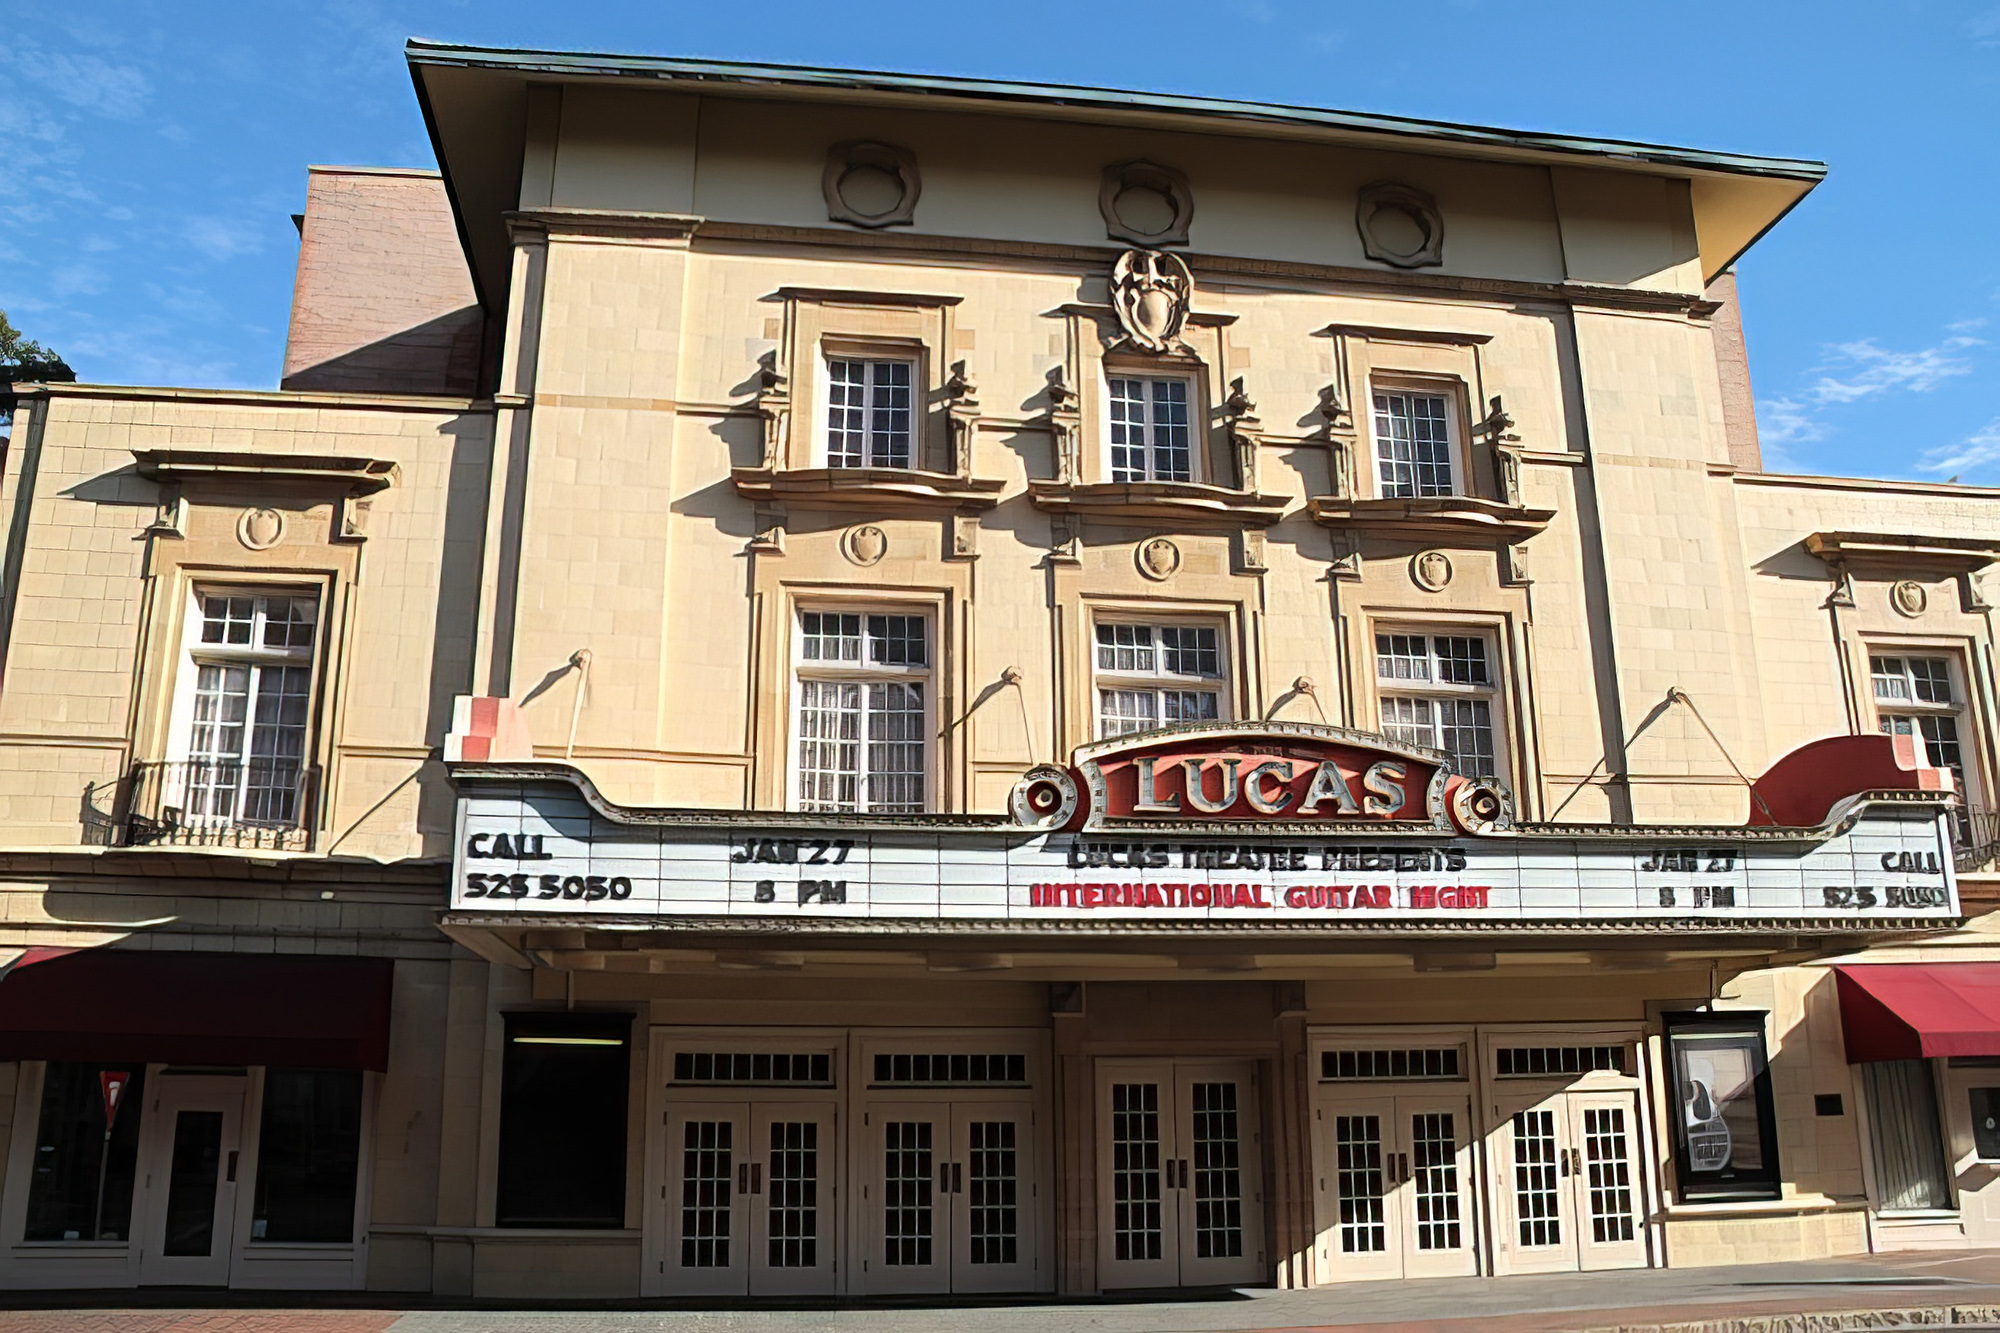 Lucas Theater in Savannah